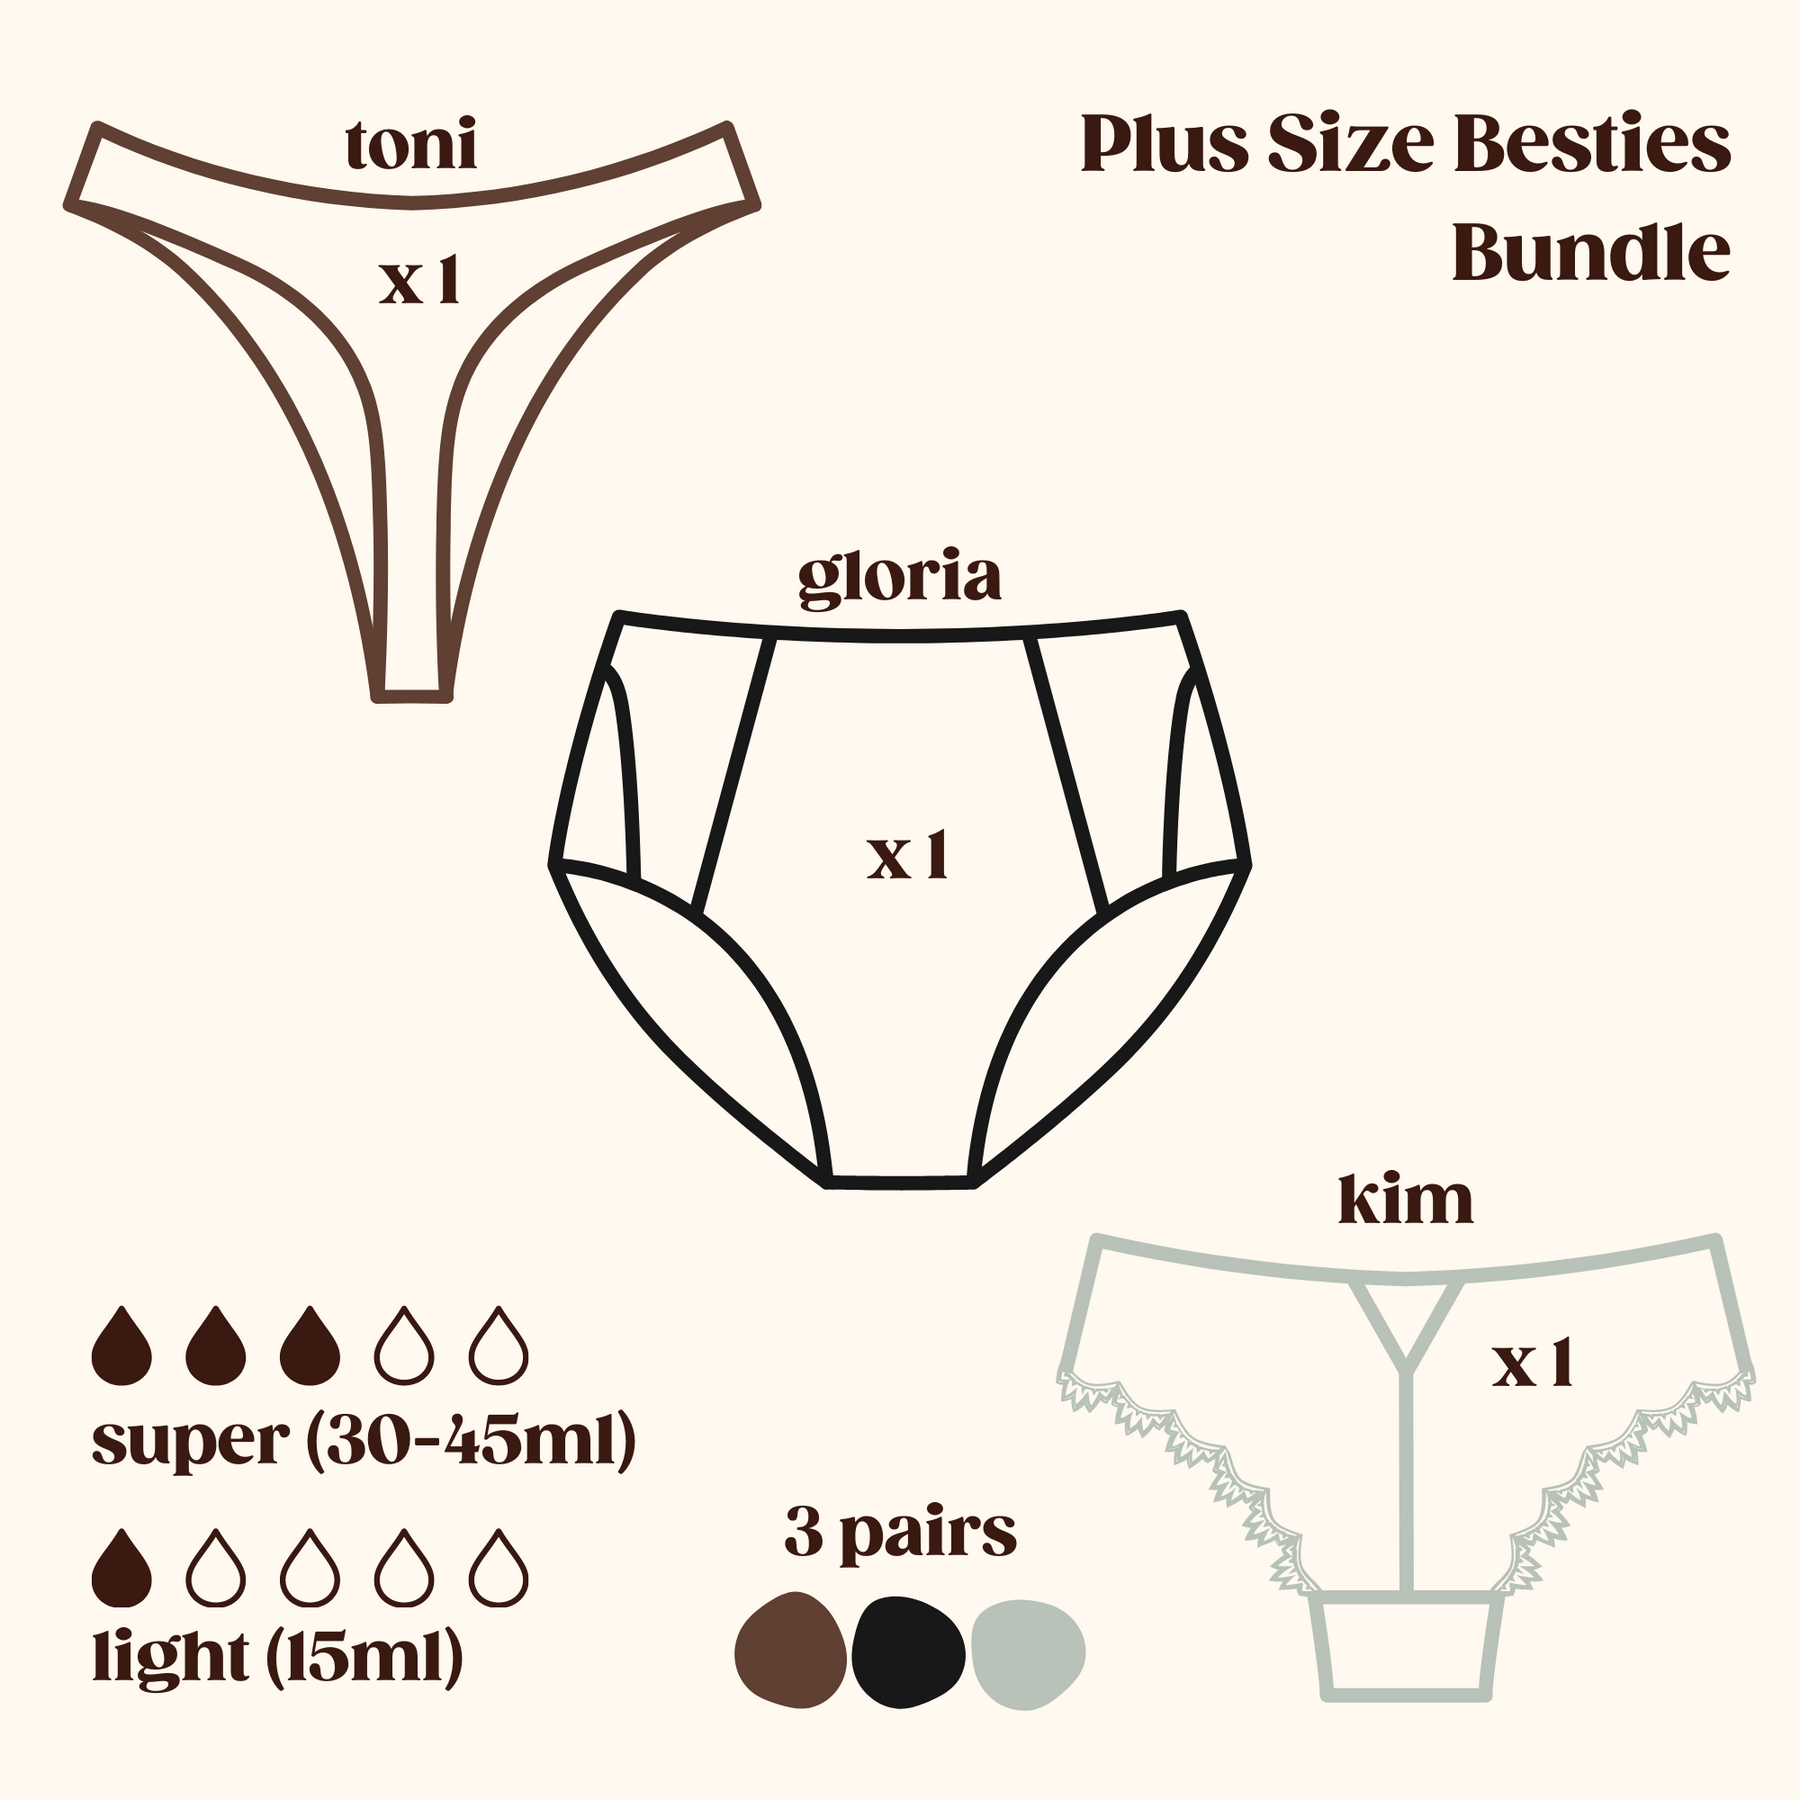 Plus Size Period & Leak-Proof Undies For Women